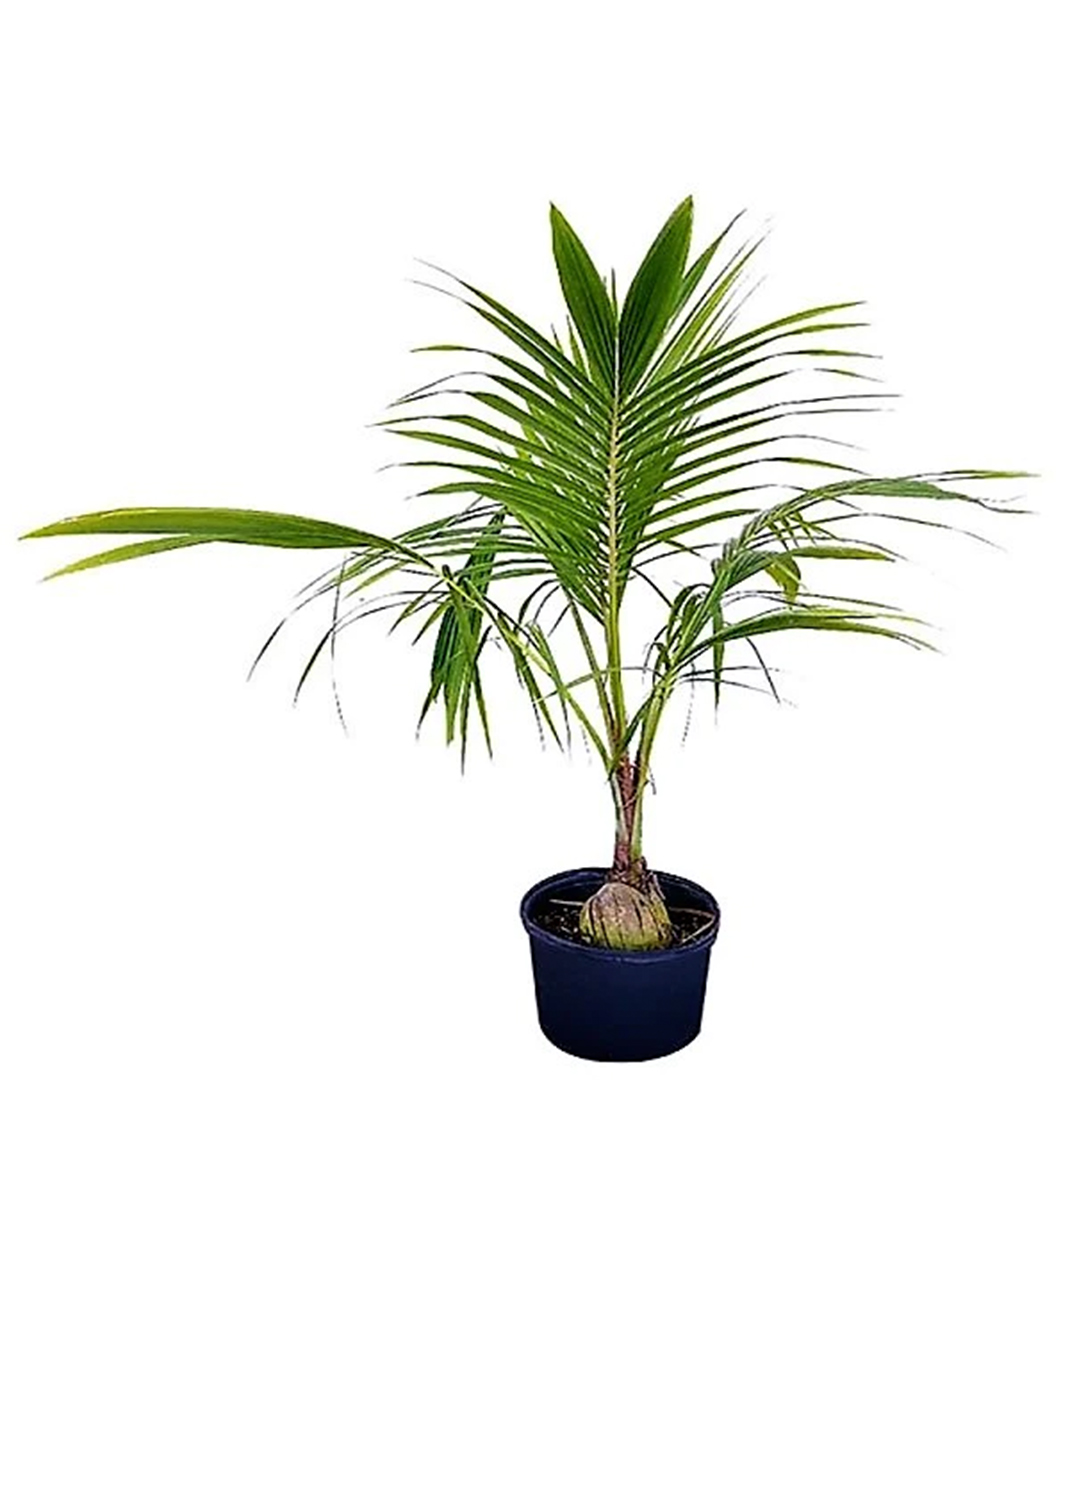 Coconut Palm, Cocos Nucifera size. 1.5m